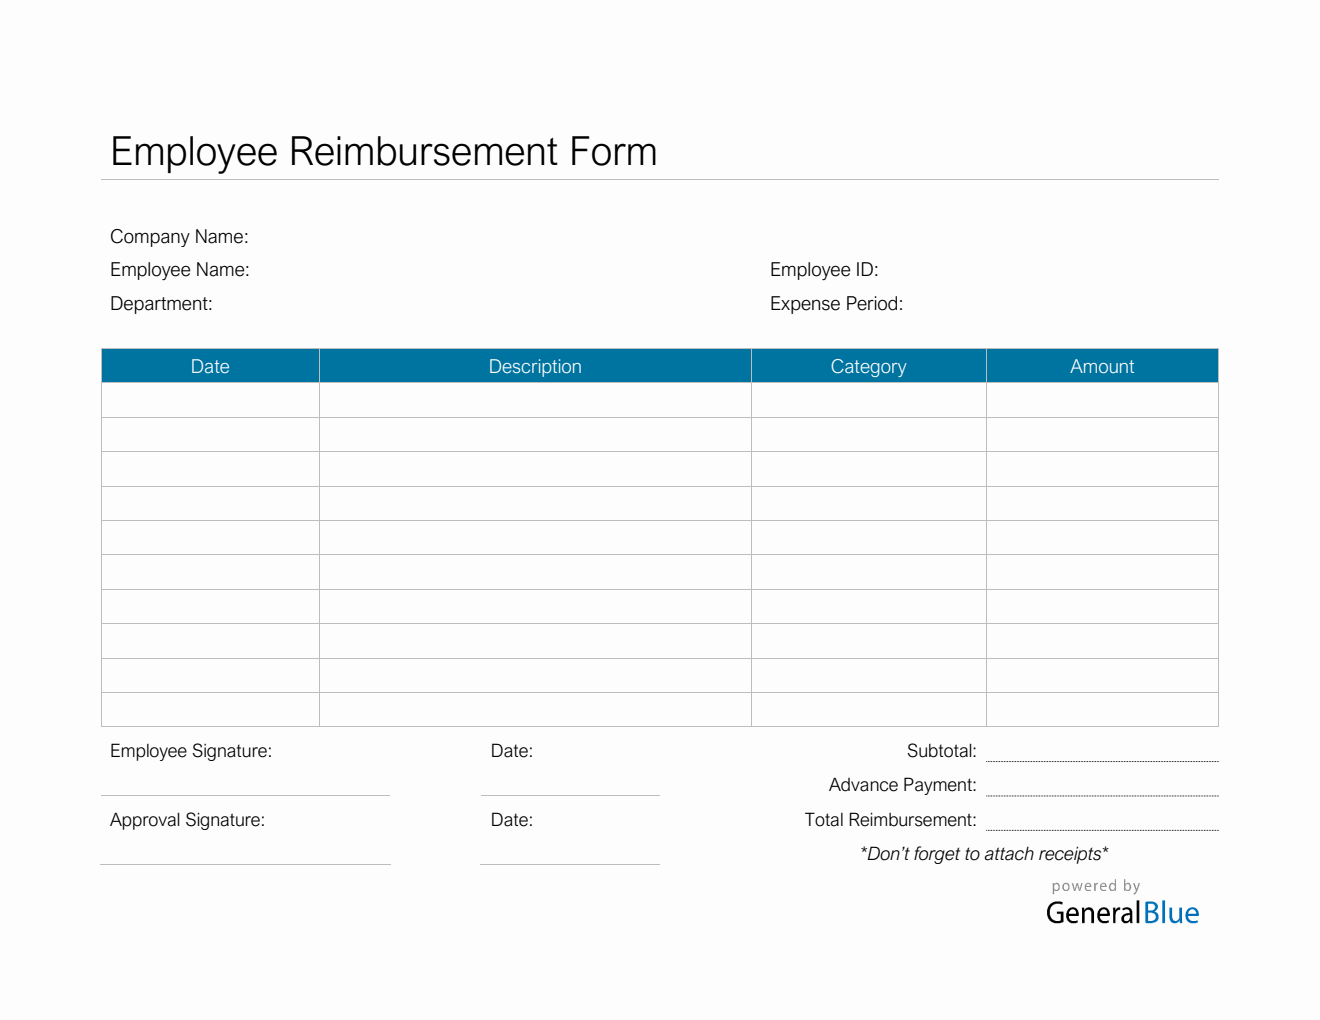 Employee Reimbursement Form in Word (Simple)